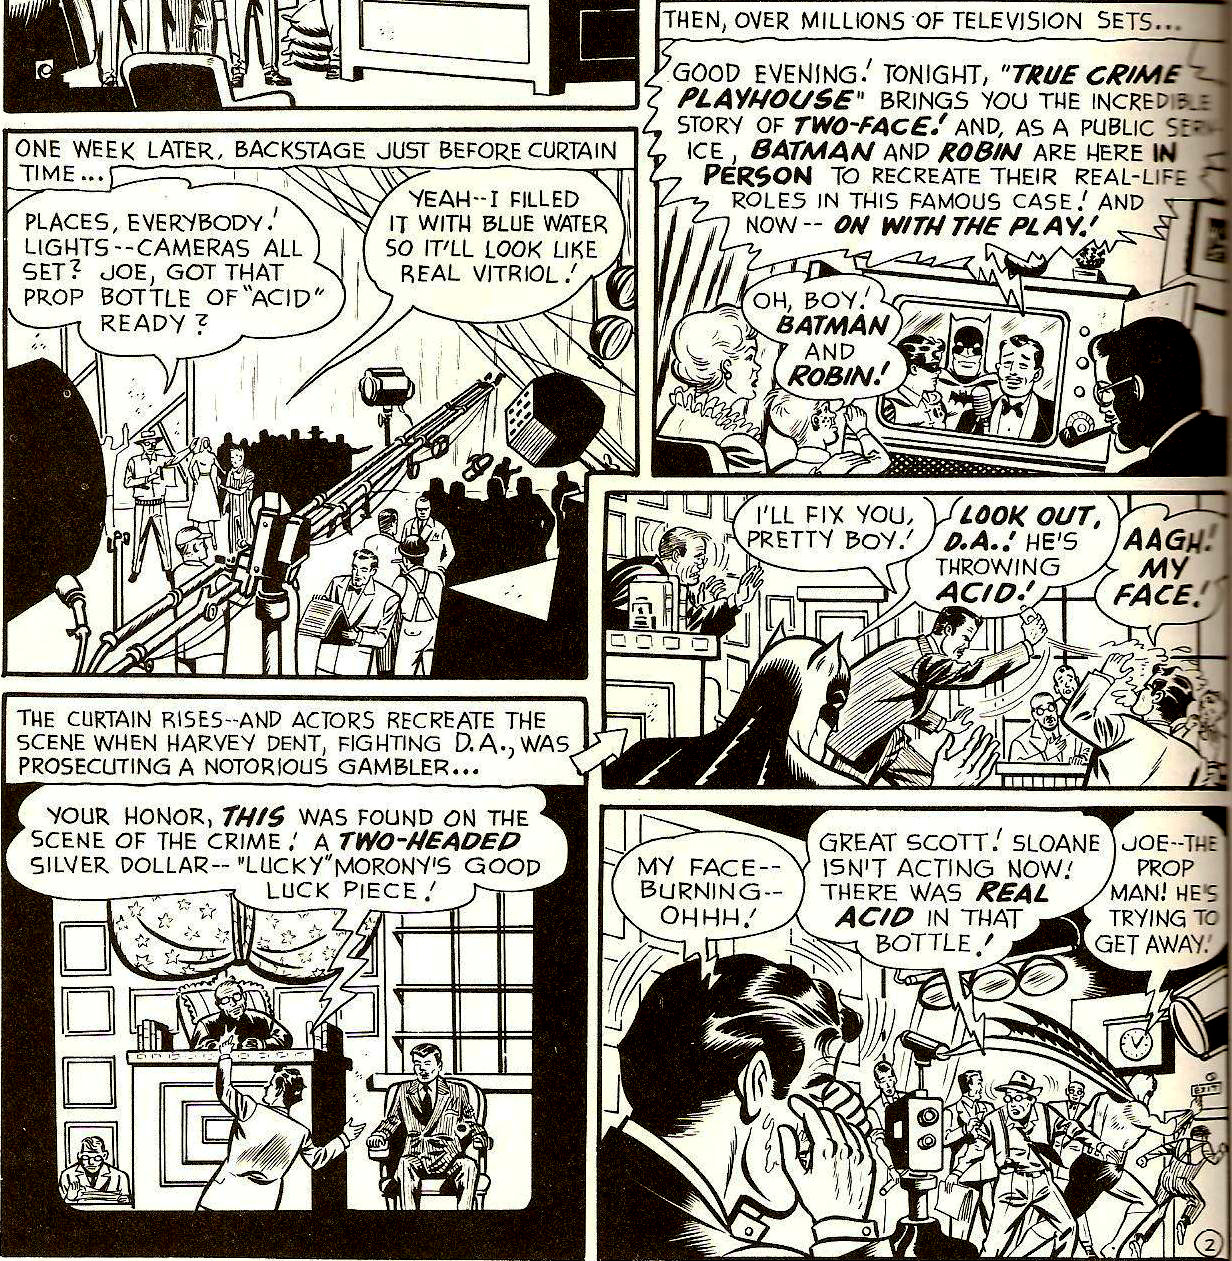 From Batman (Vol. 1) #68 (1951)